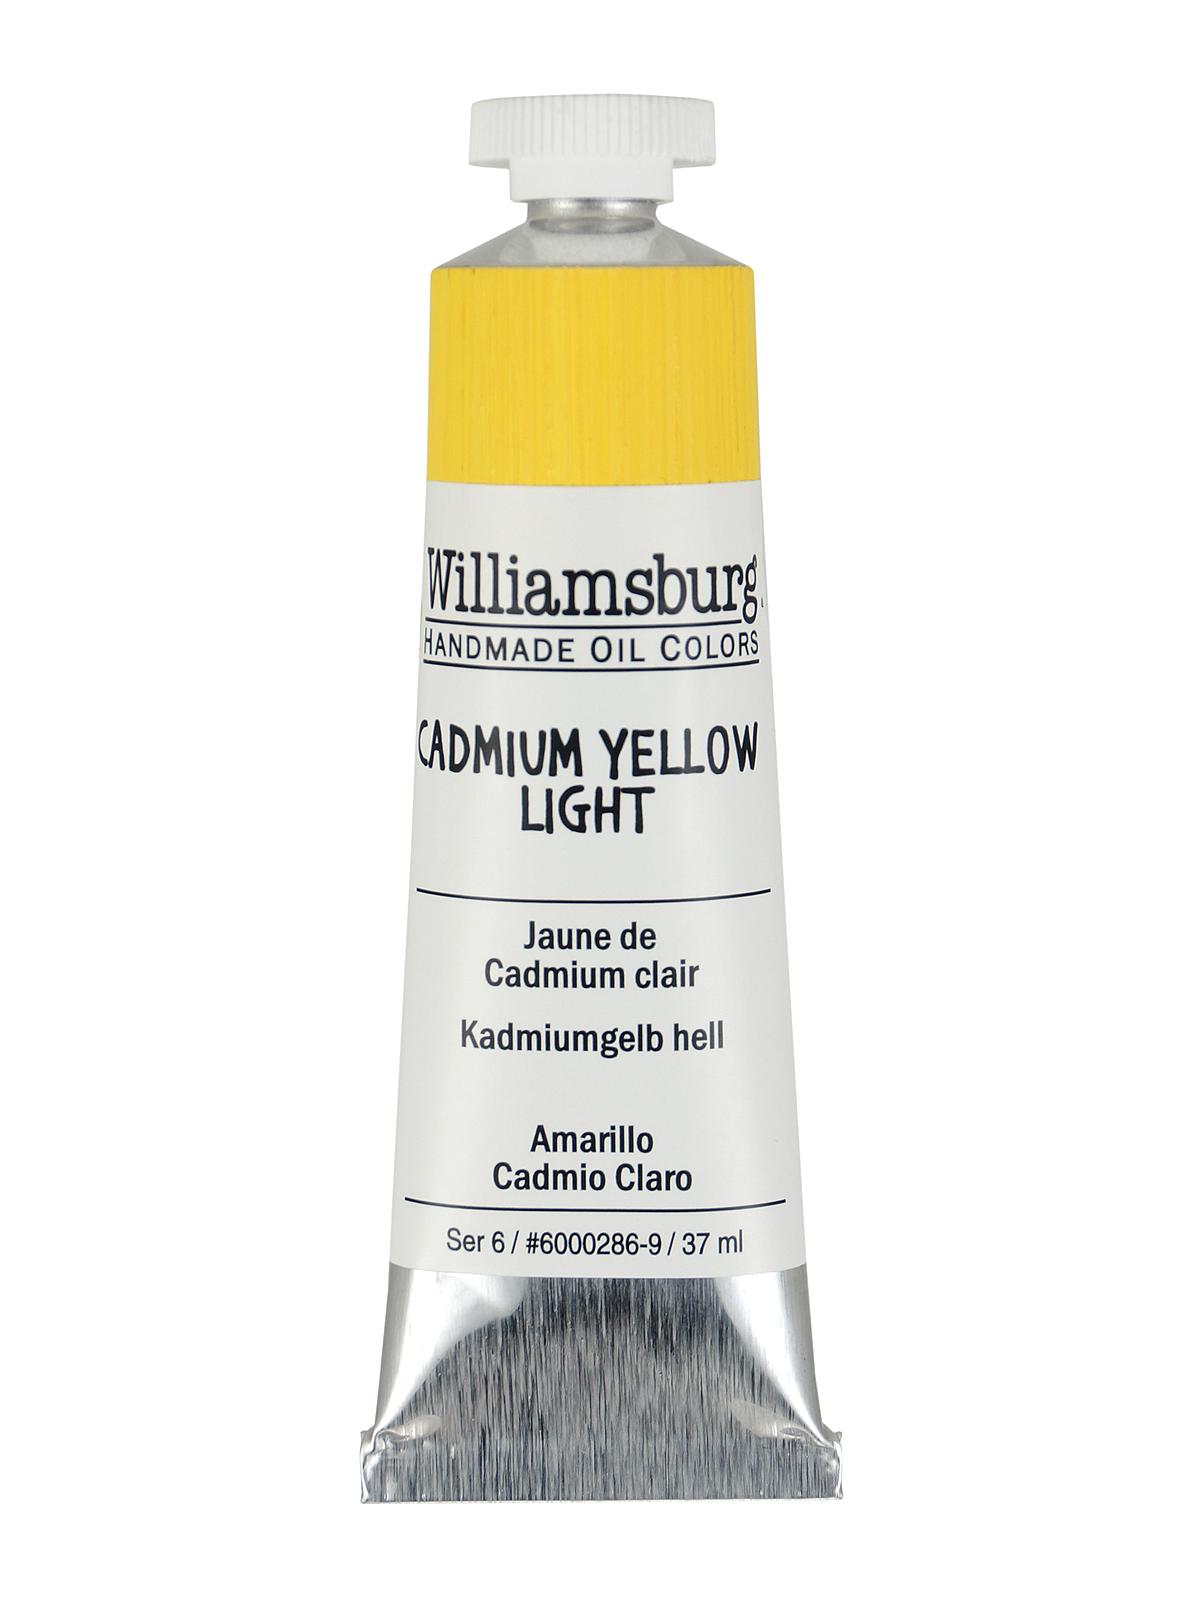 Handmade Oil Colors Cadmium Yellow Light 37 Ml